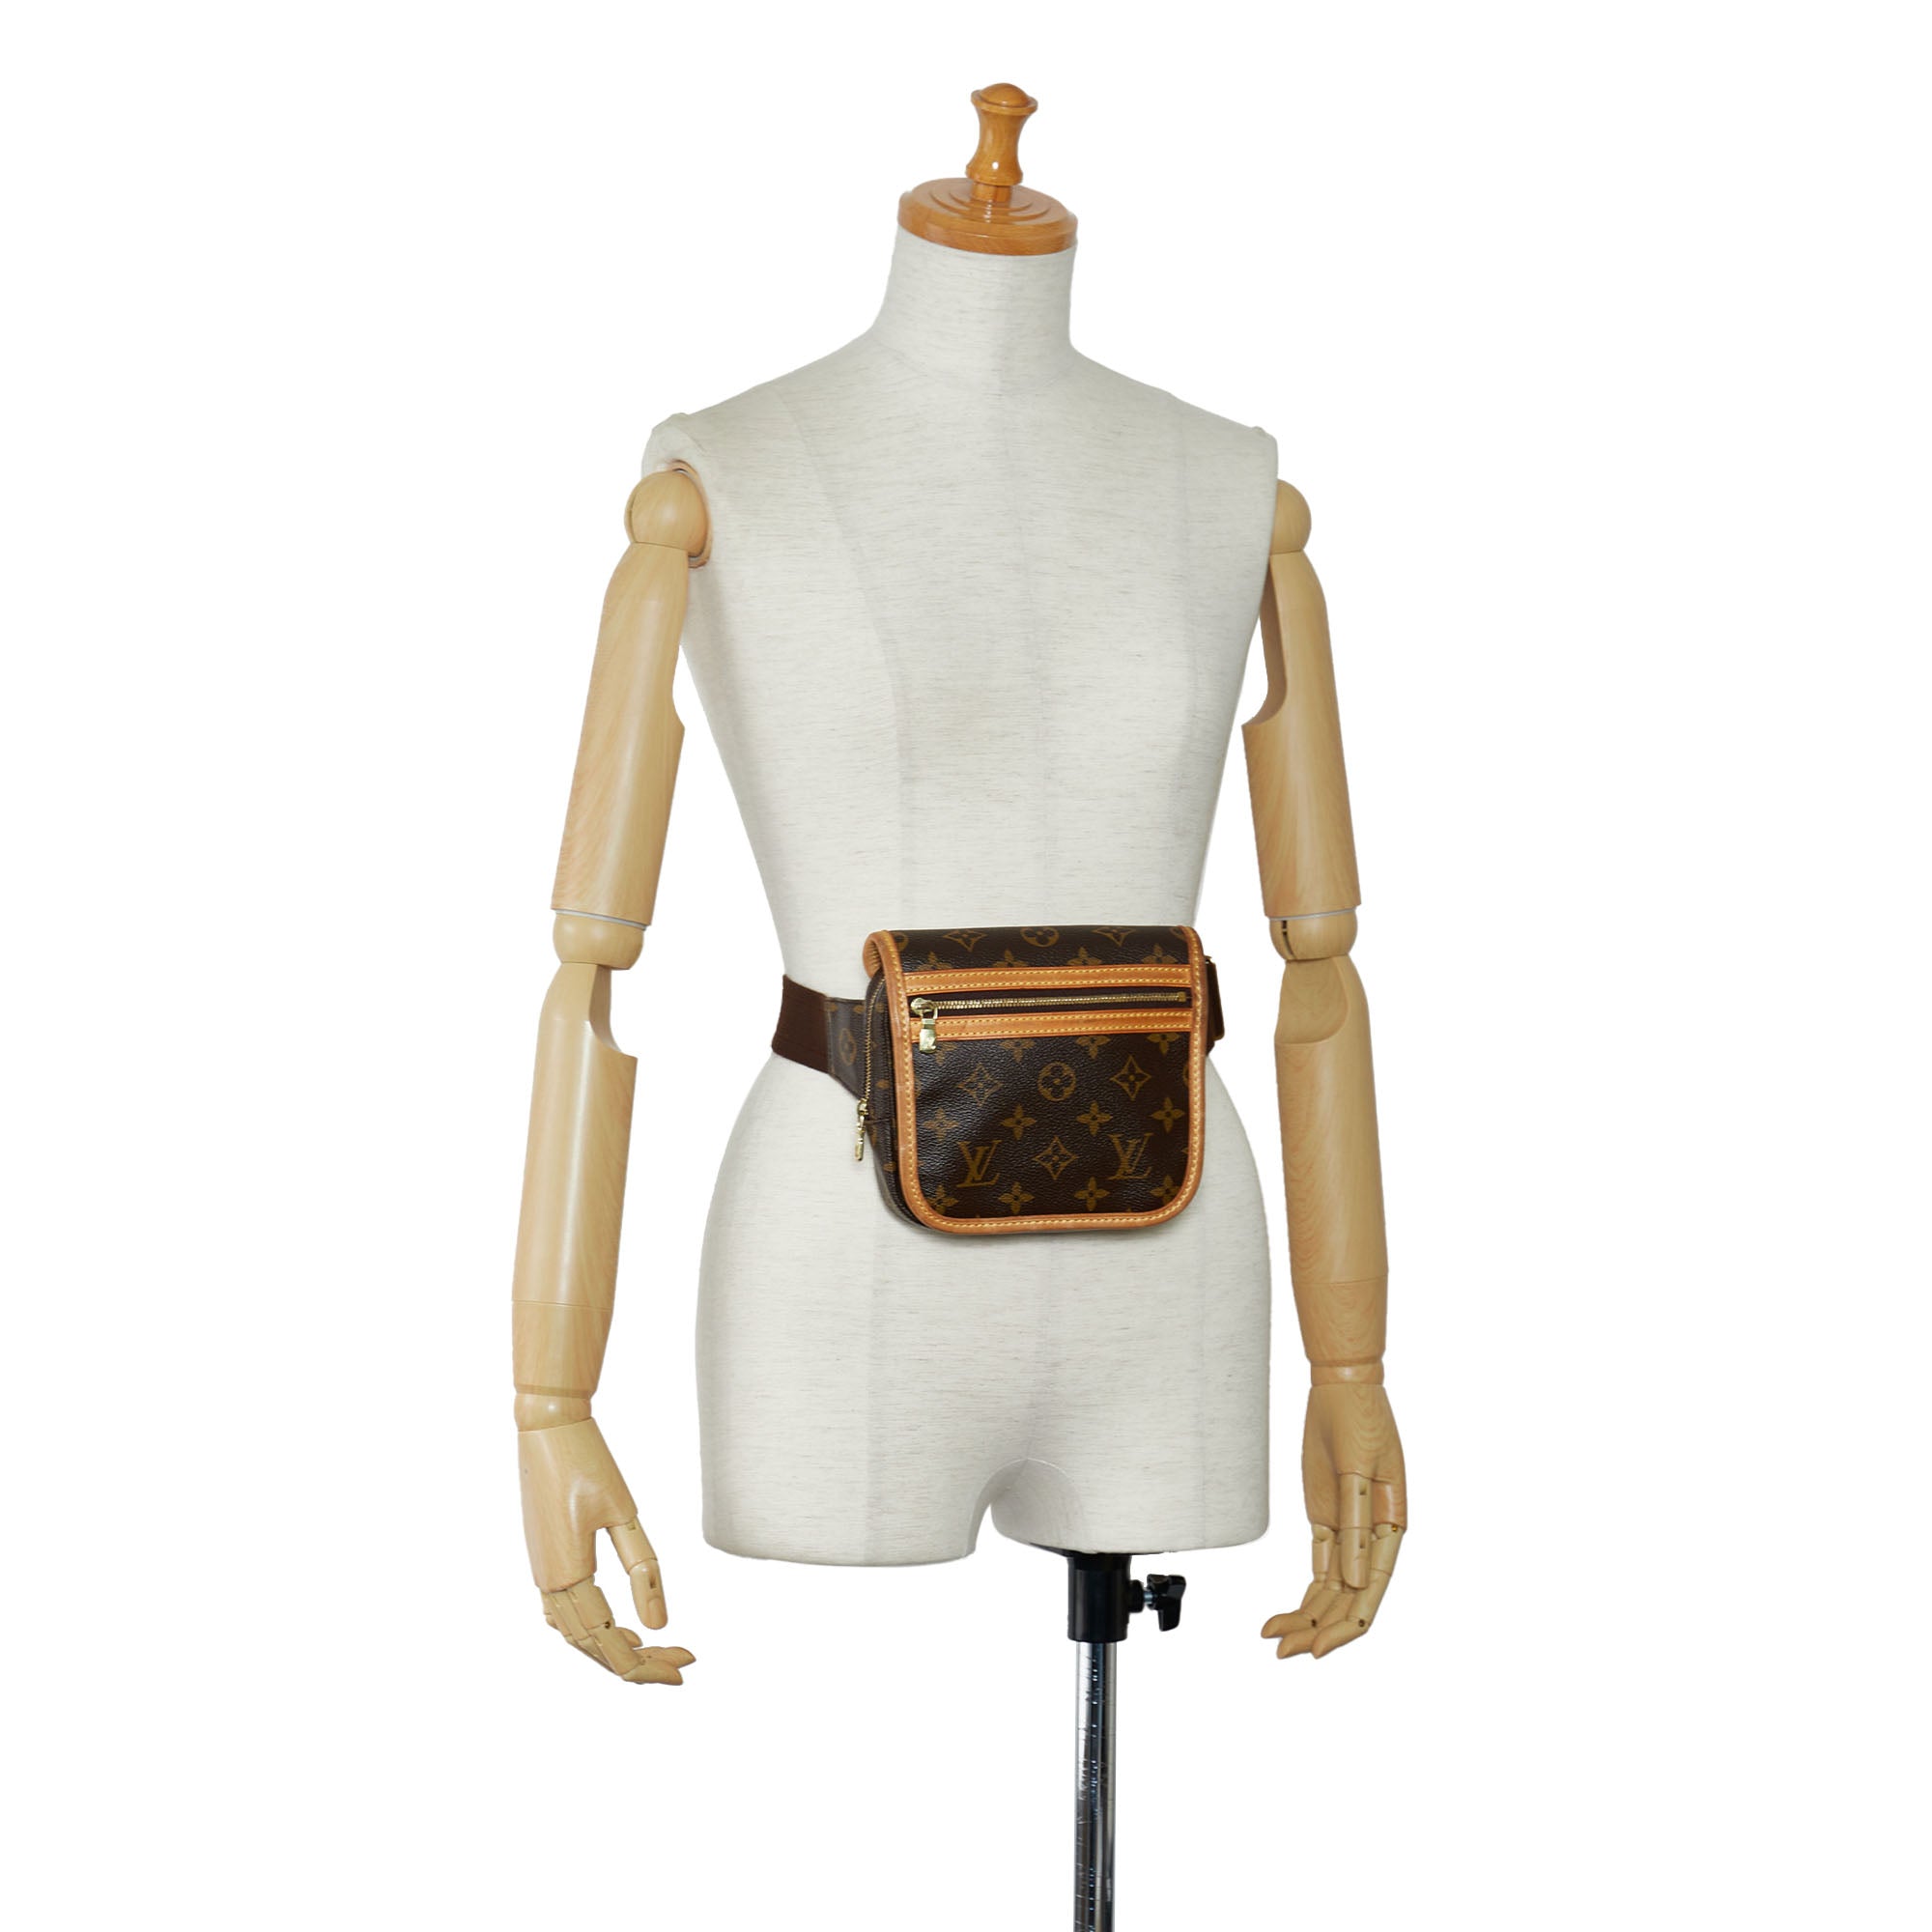 Louis Vuitton Monogram Bosphore bumbag belt bag